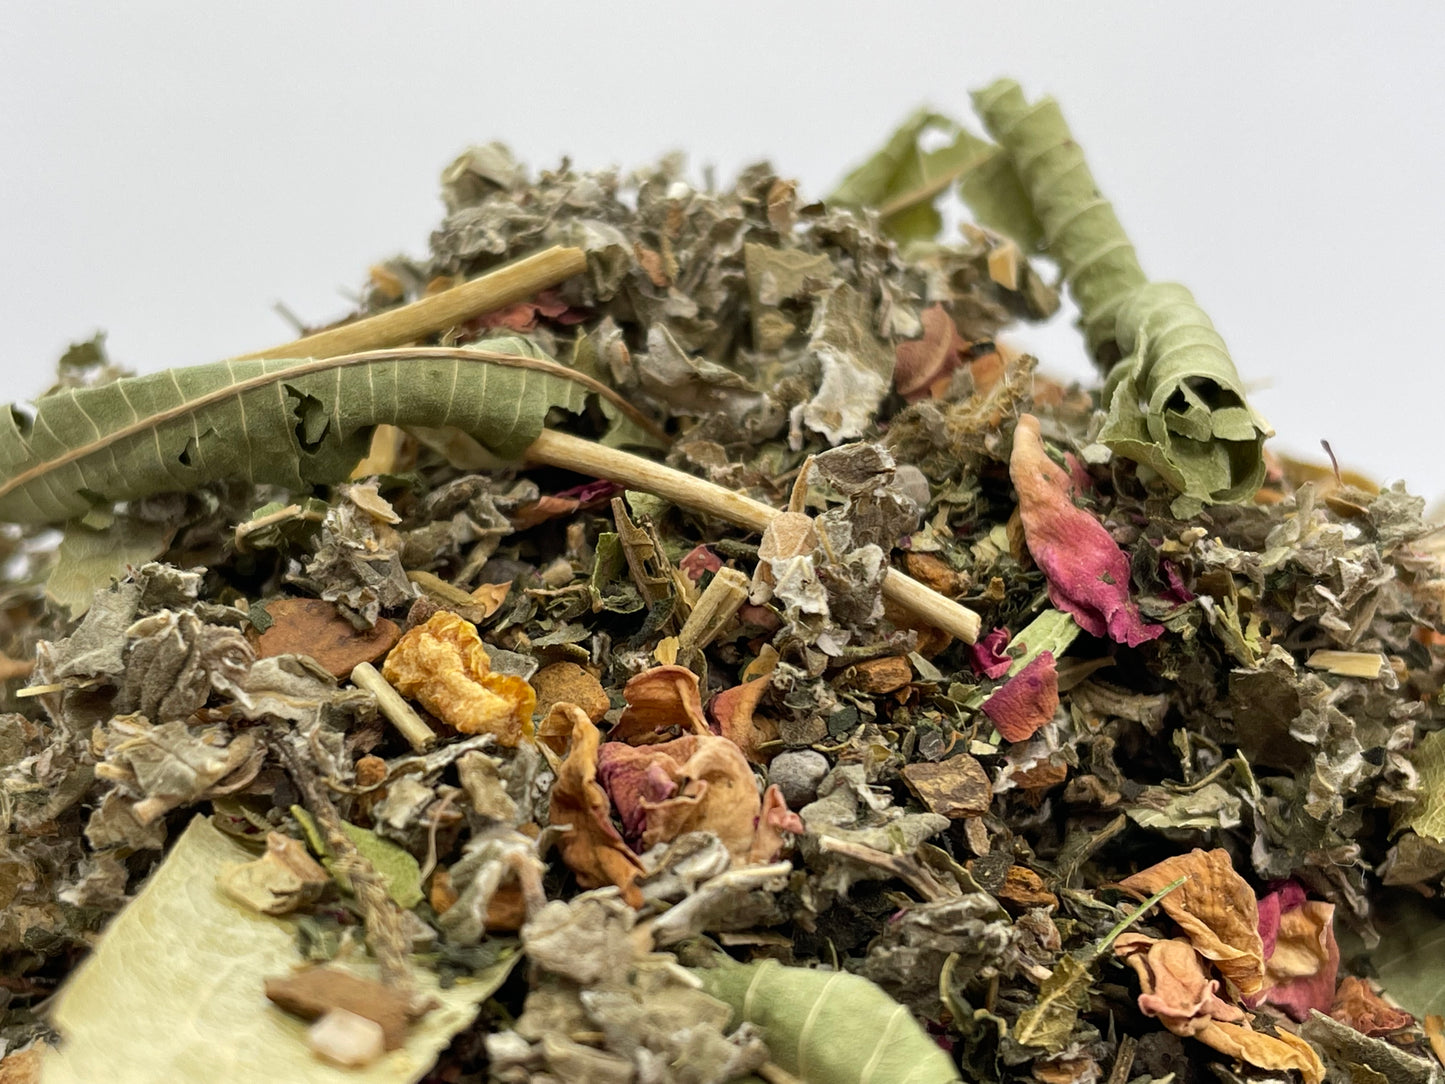 Wiccan Women's Tea, Herbal Tea, Loose Leaf Tea, Caffeine Free Tea